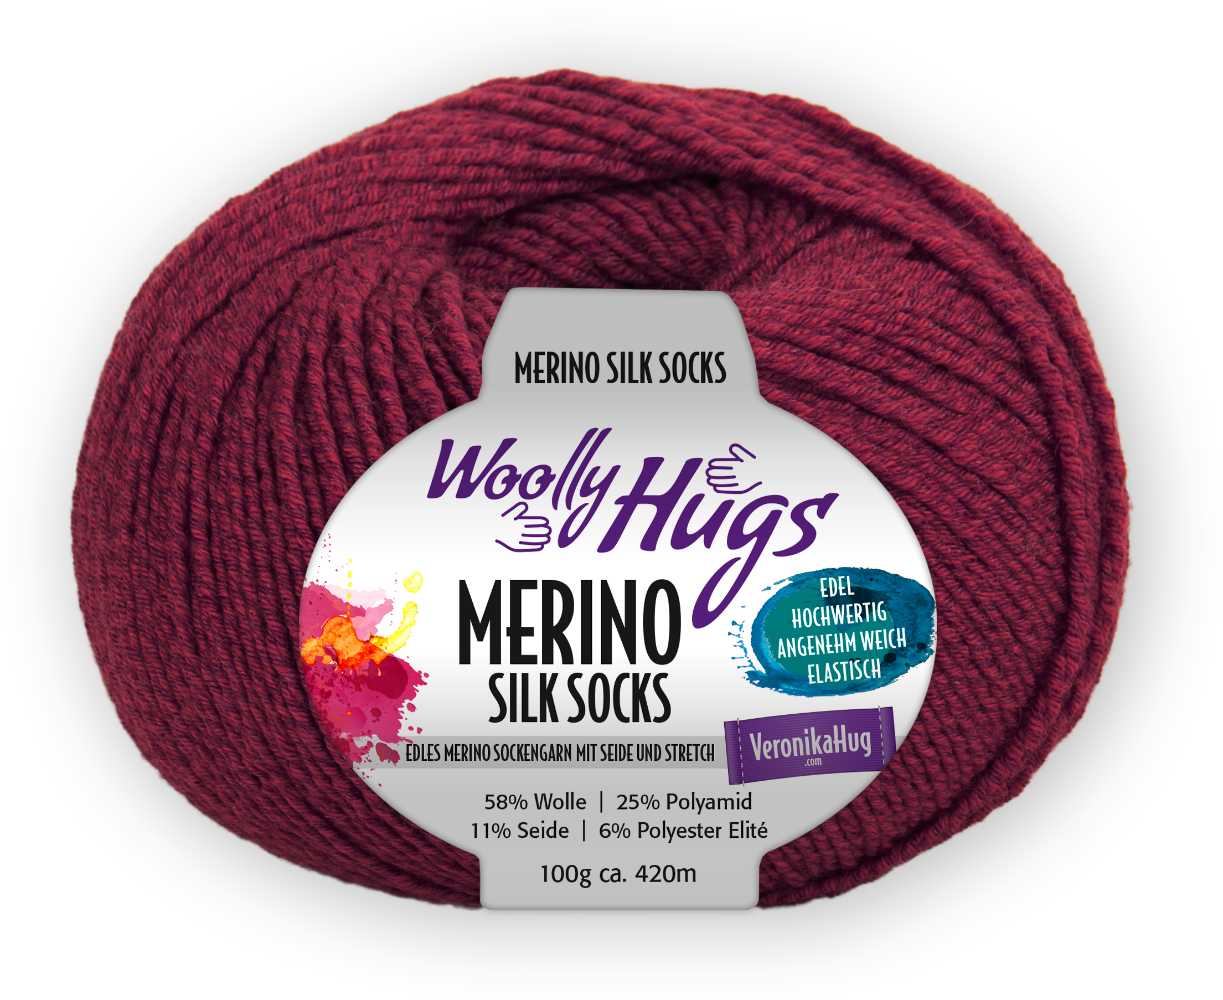 Merino Silk Socks Stretch, 4-fach von Woolly Hugs 0238 - bordeaux